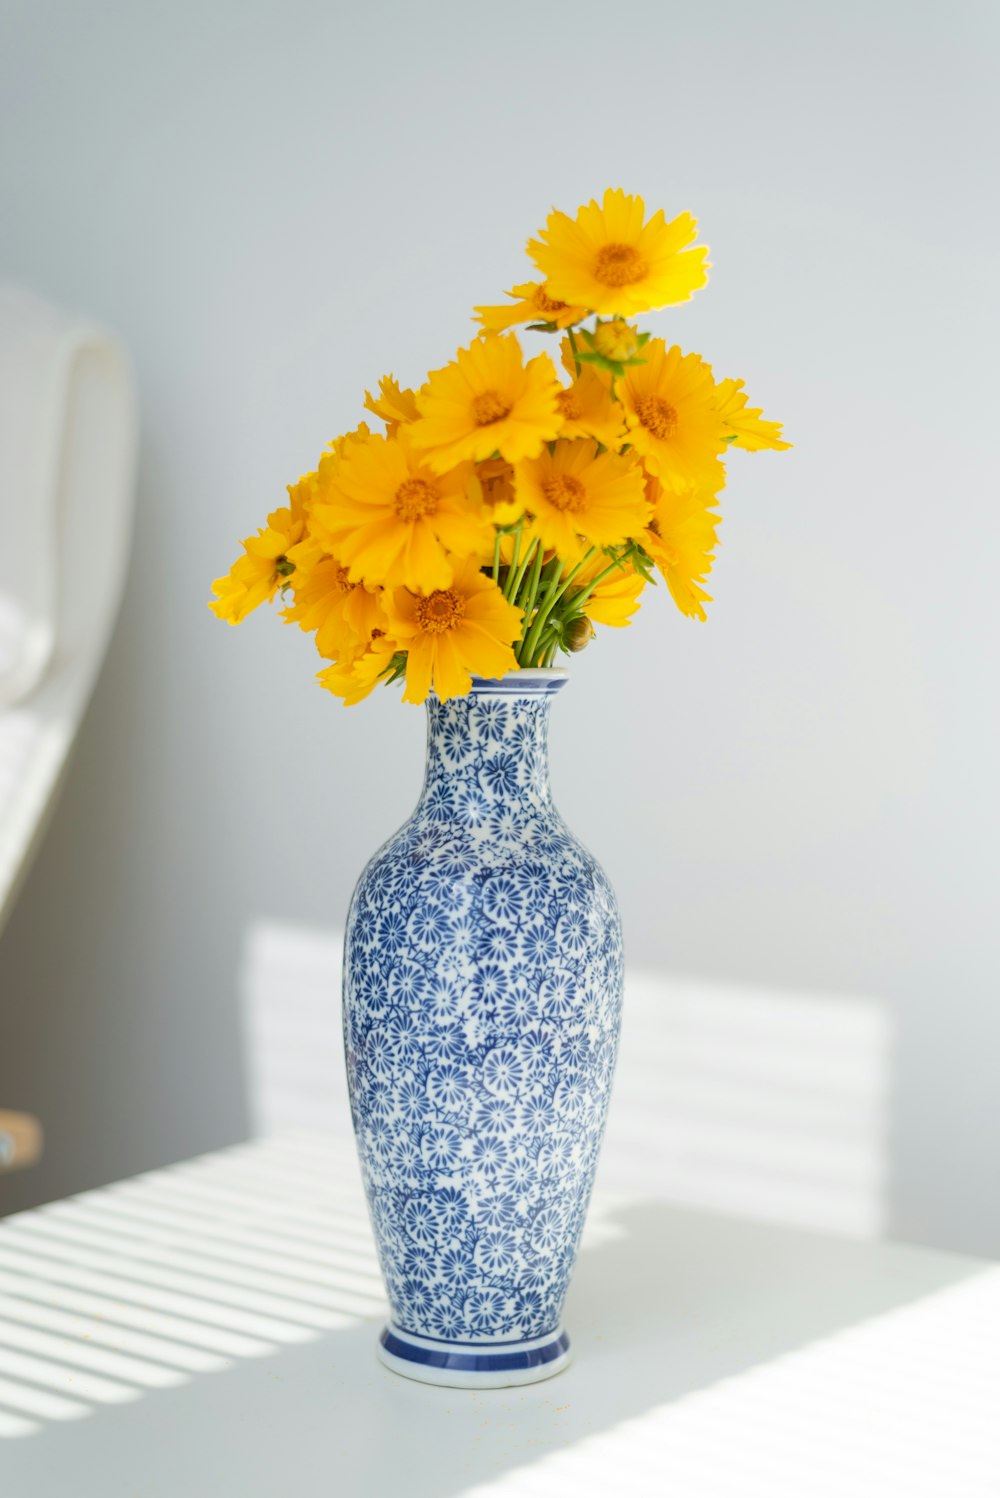 yellow flowers in white ceramic vase